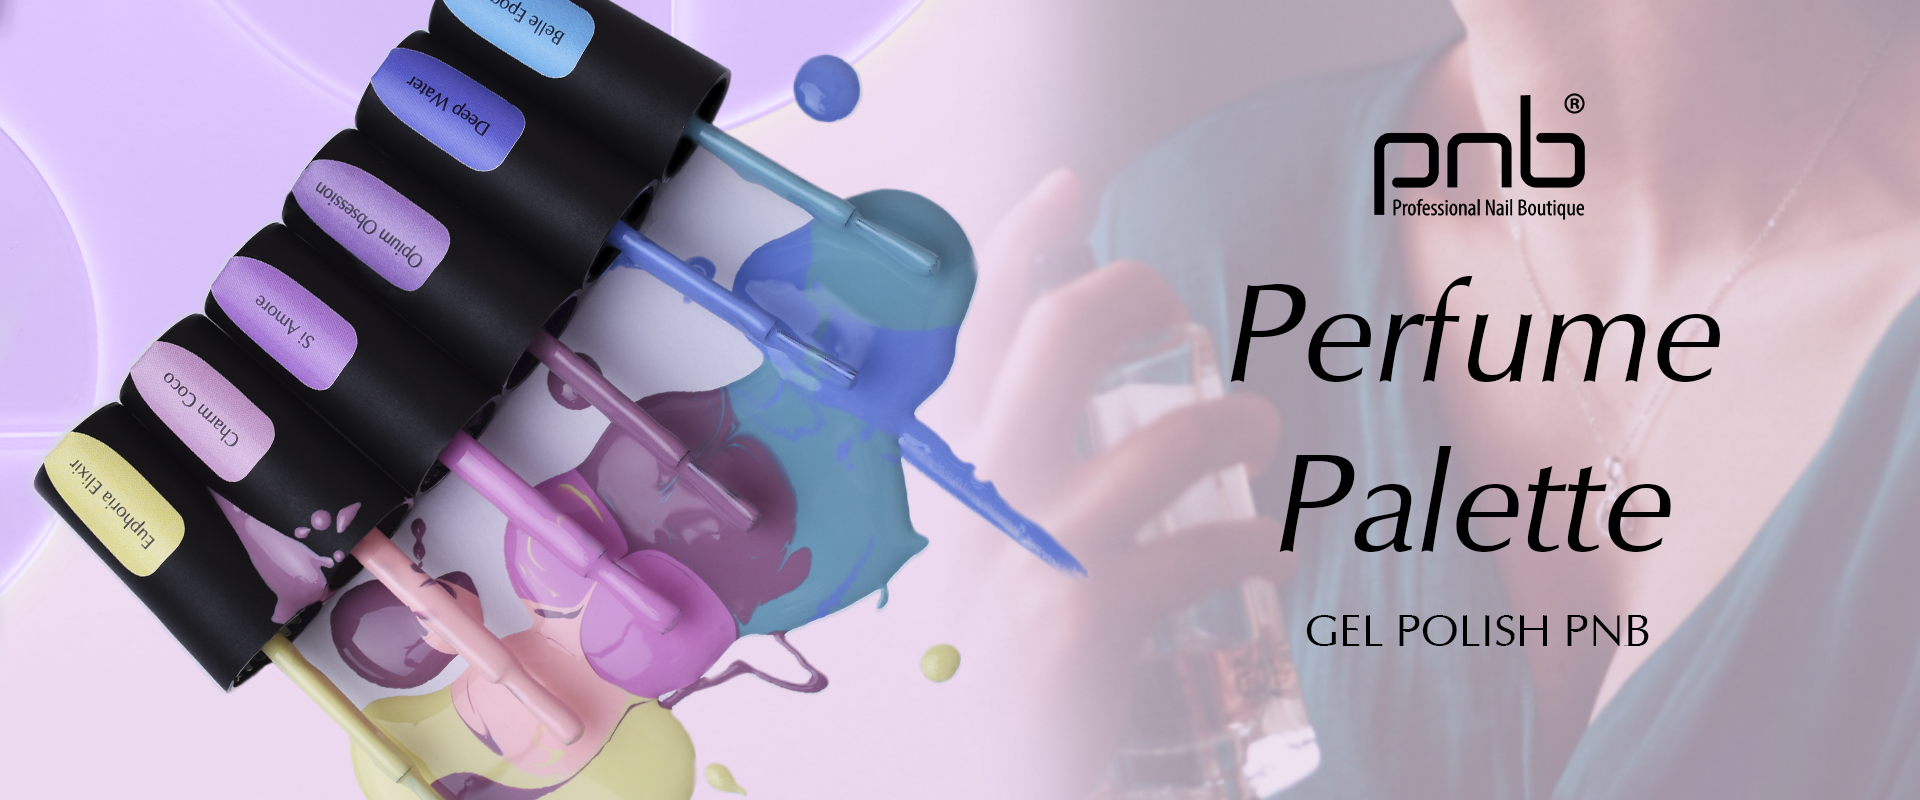 Perfume Palette PNB